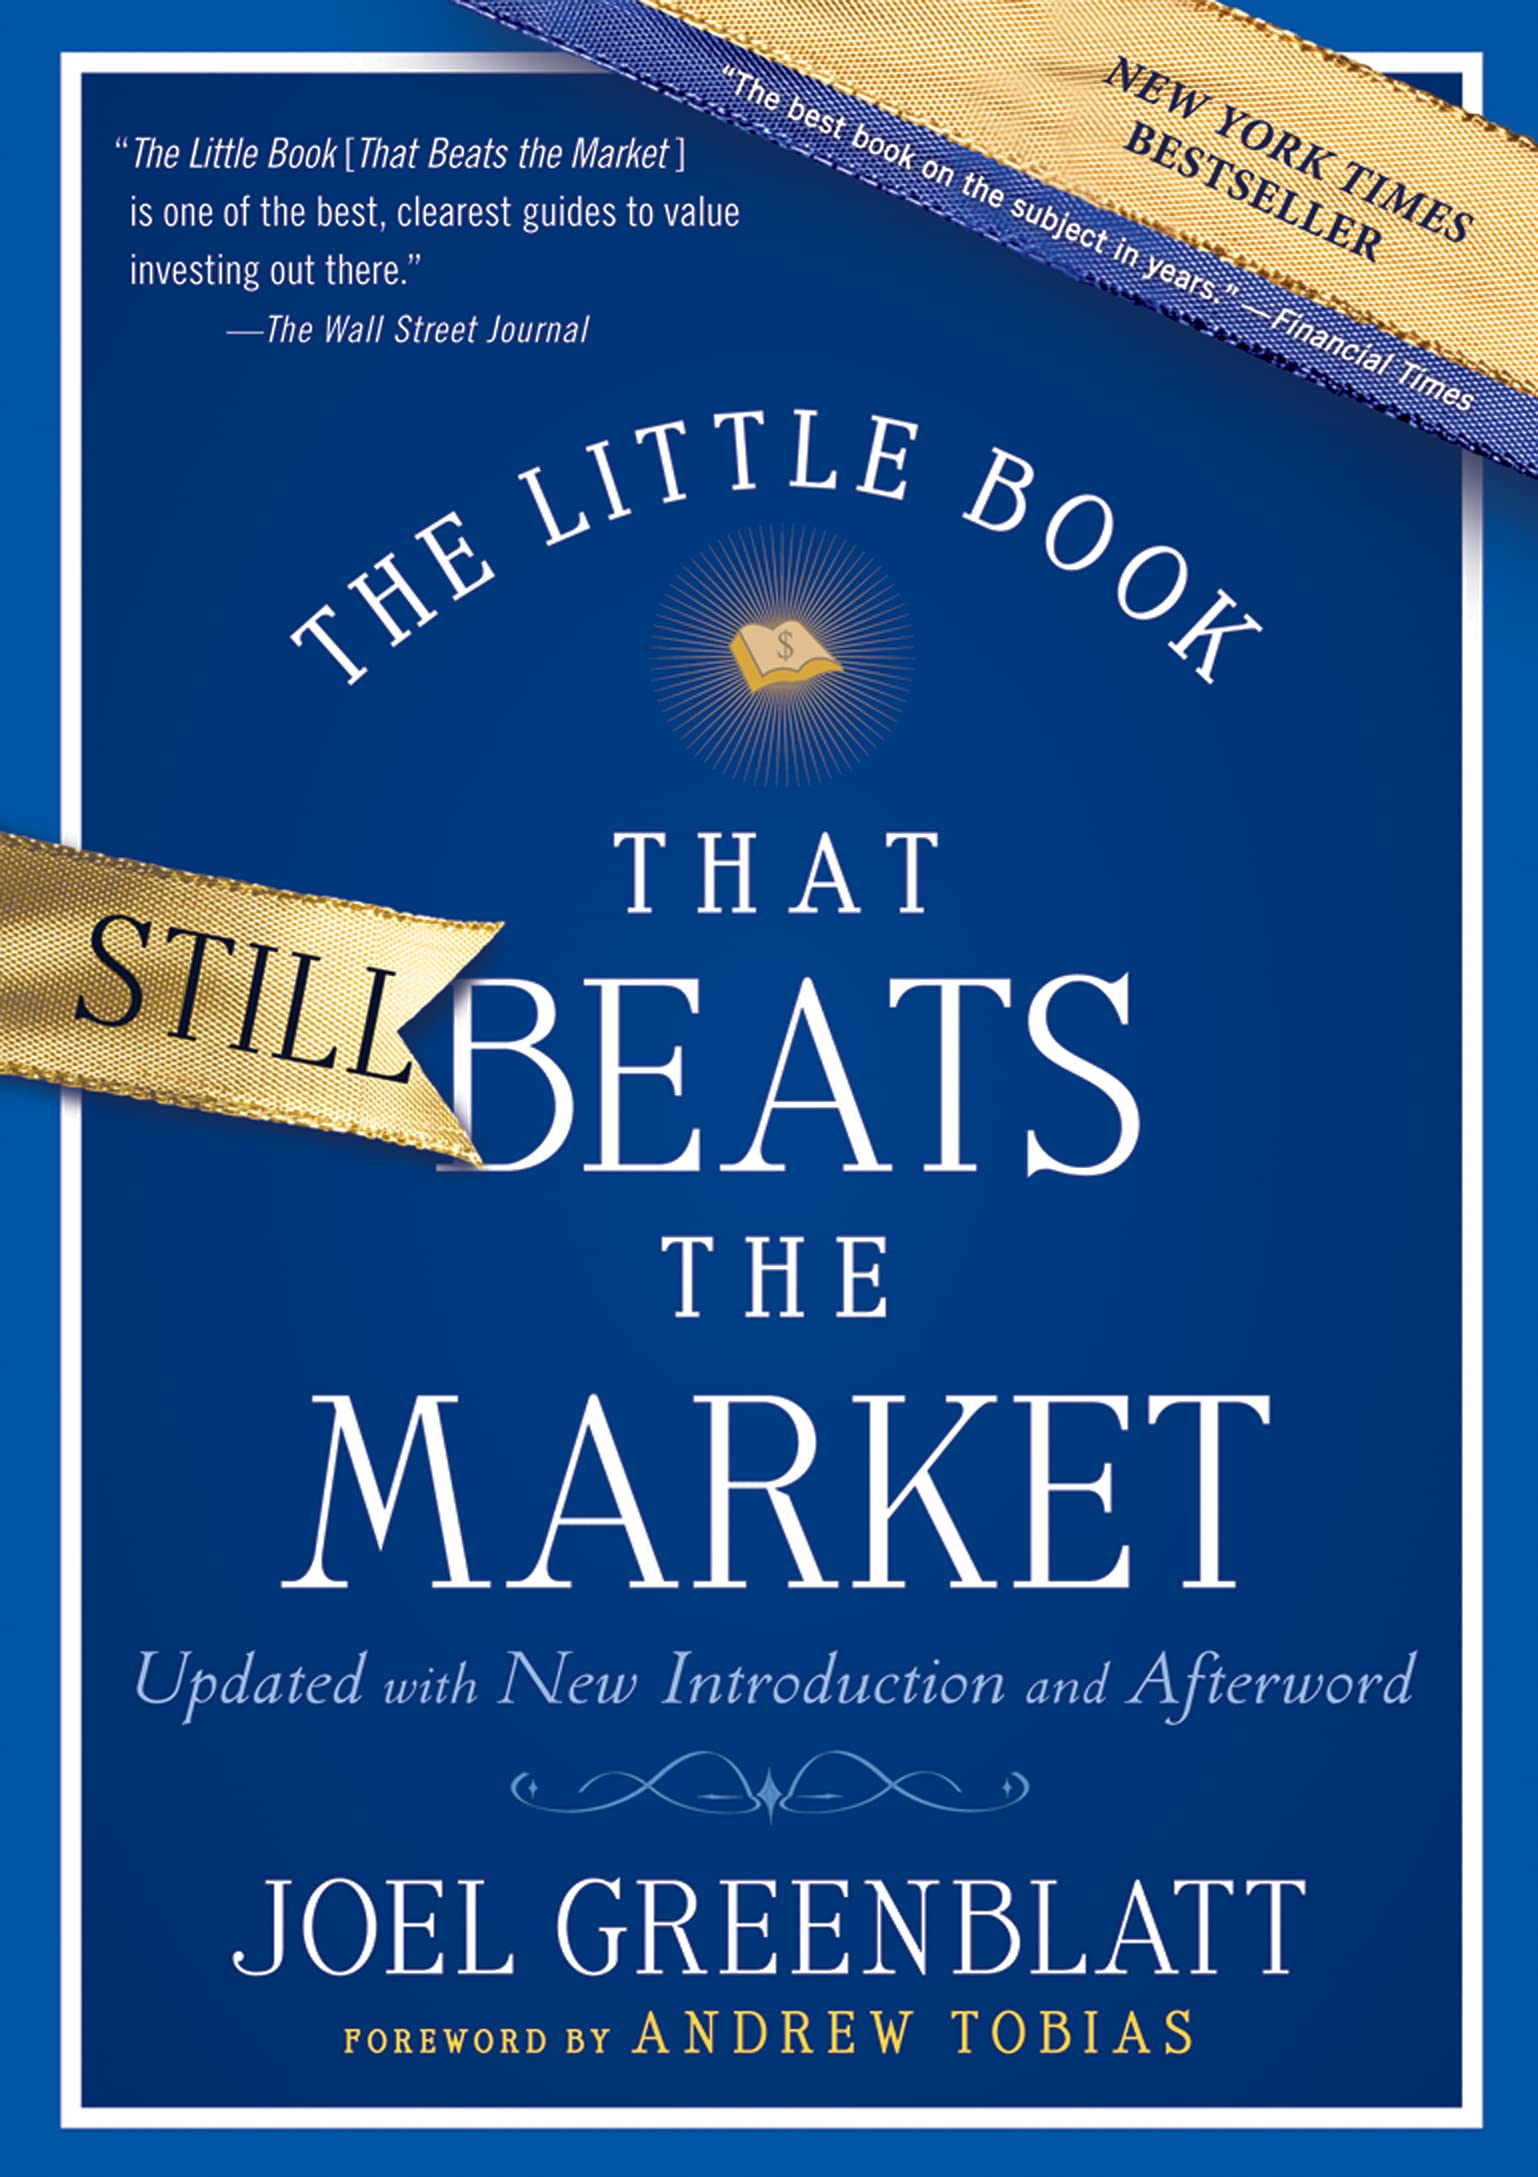 The Little Book That Still Beats the Market By Joel Greenblatt